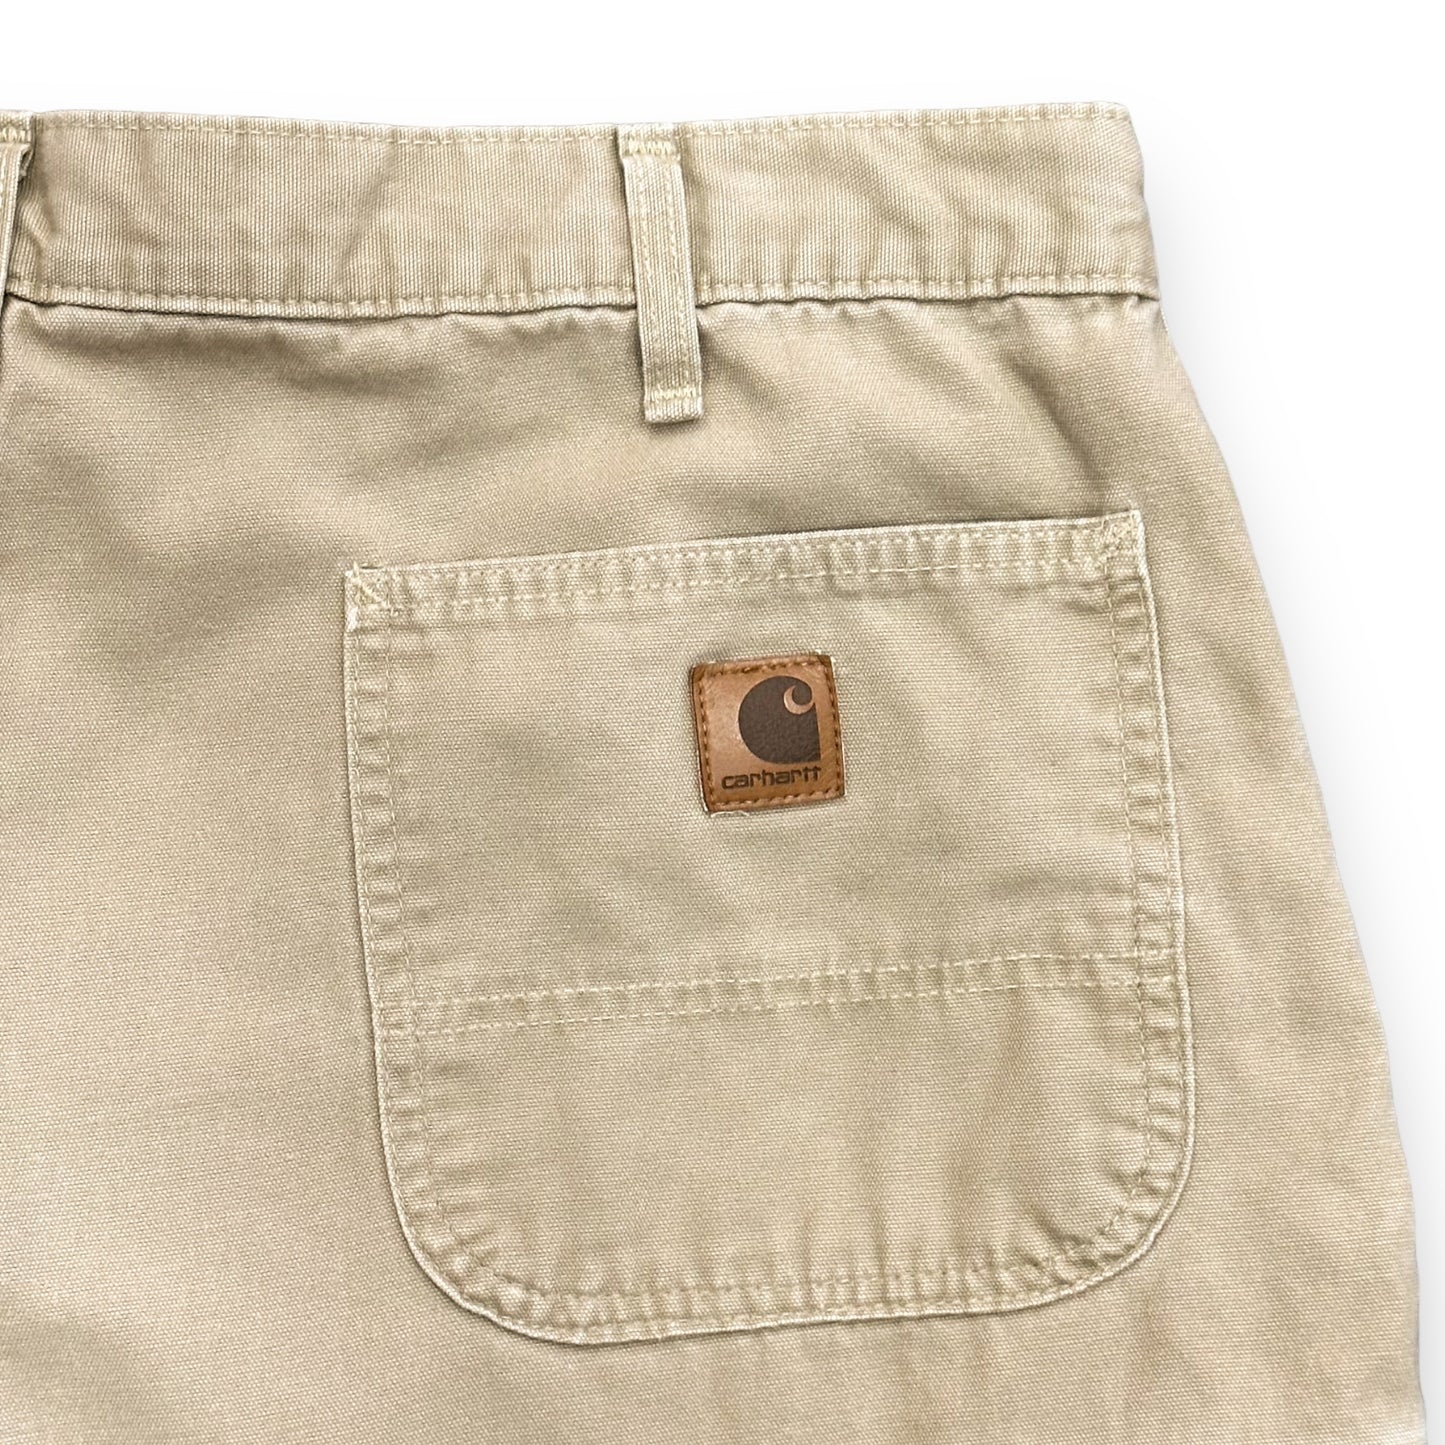 Vintage Carhartt Shorts